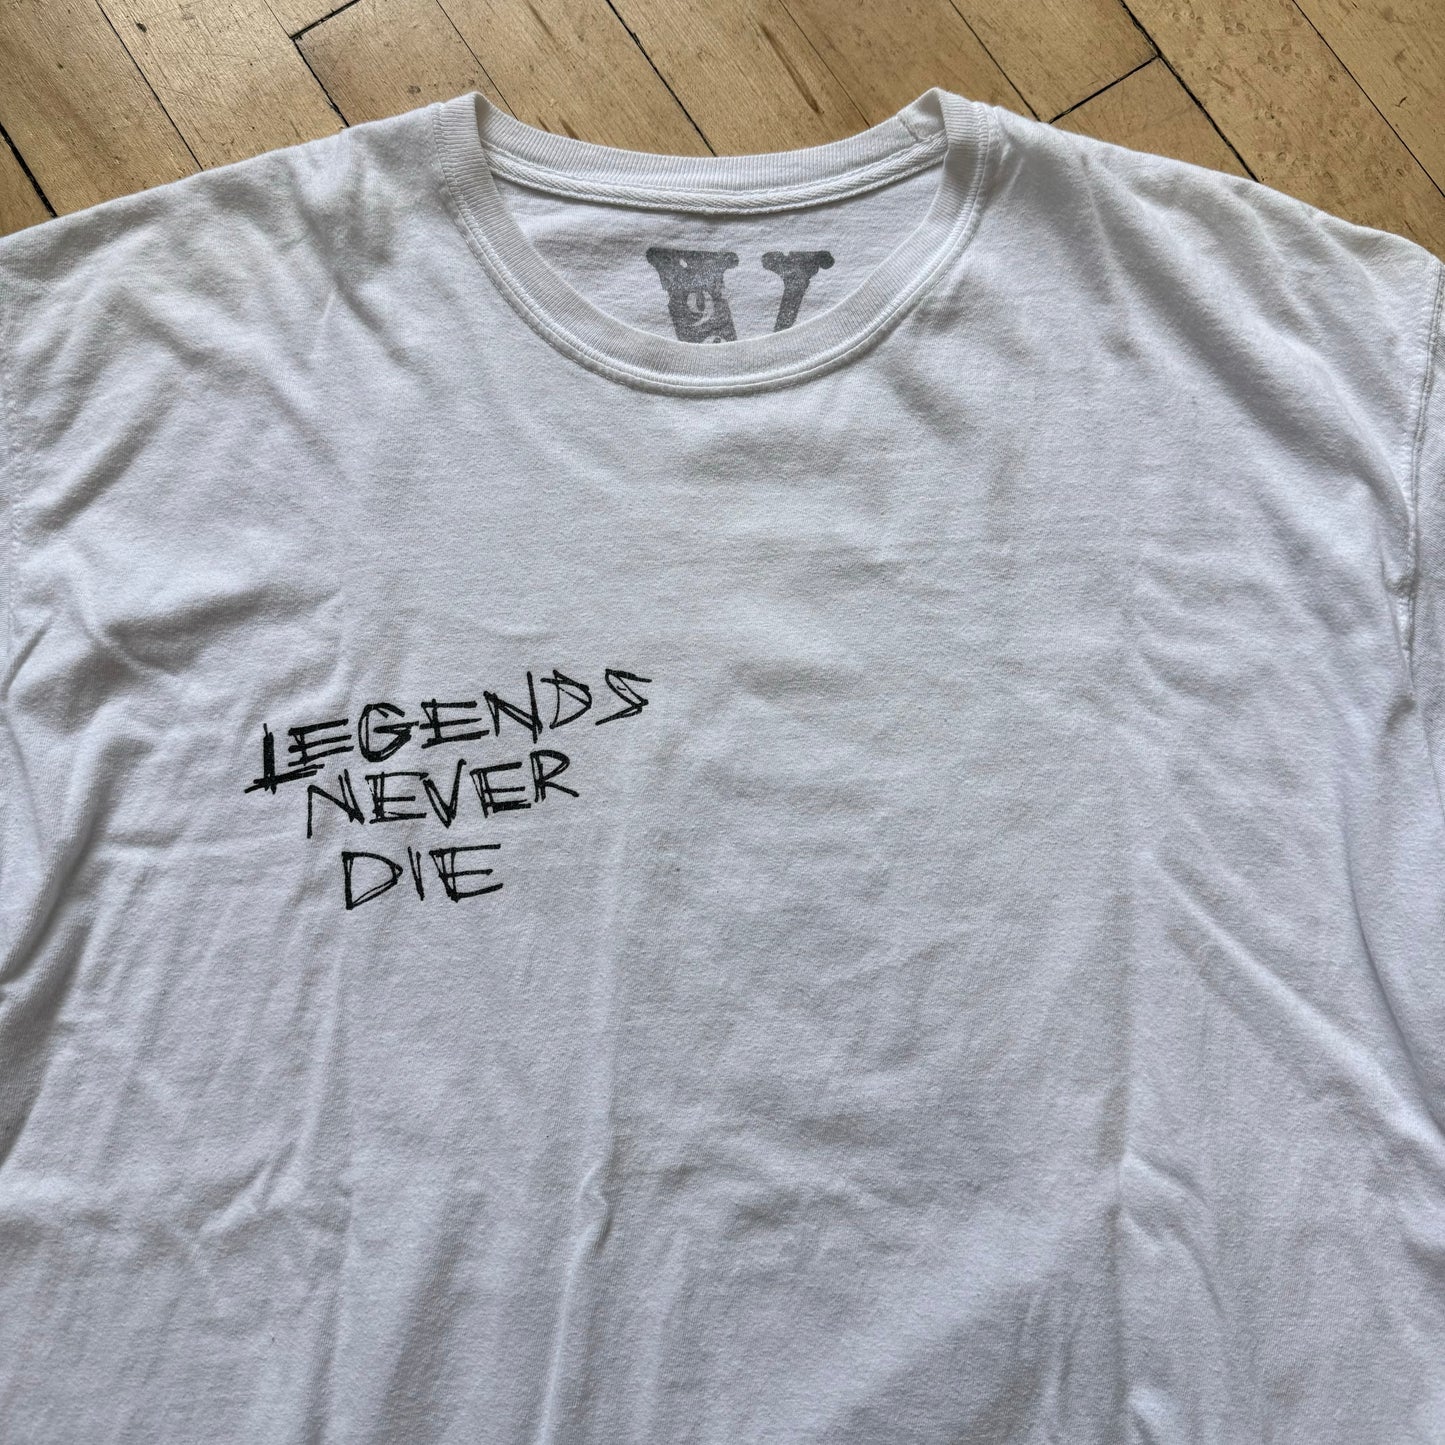 Juice world X Vlone Legends Never Die T-shirt Sz XL